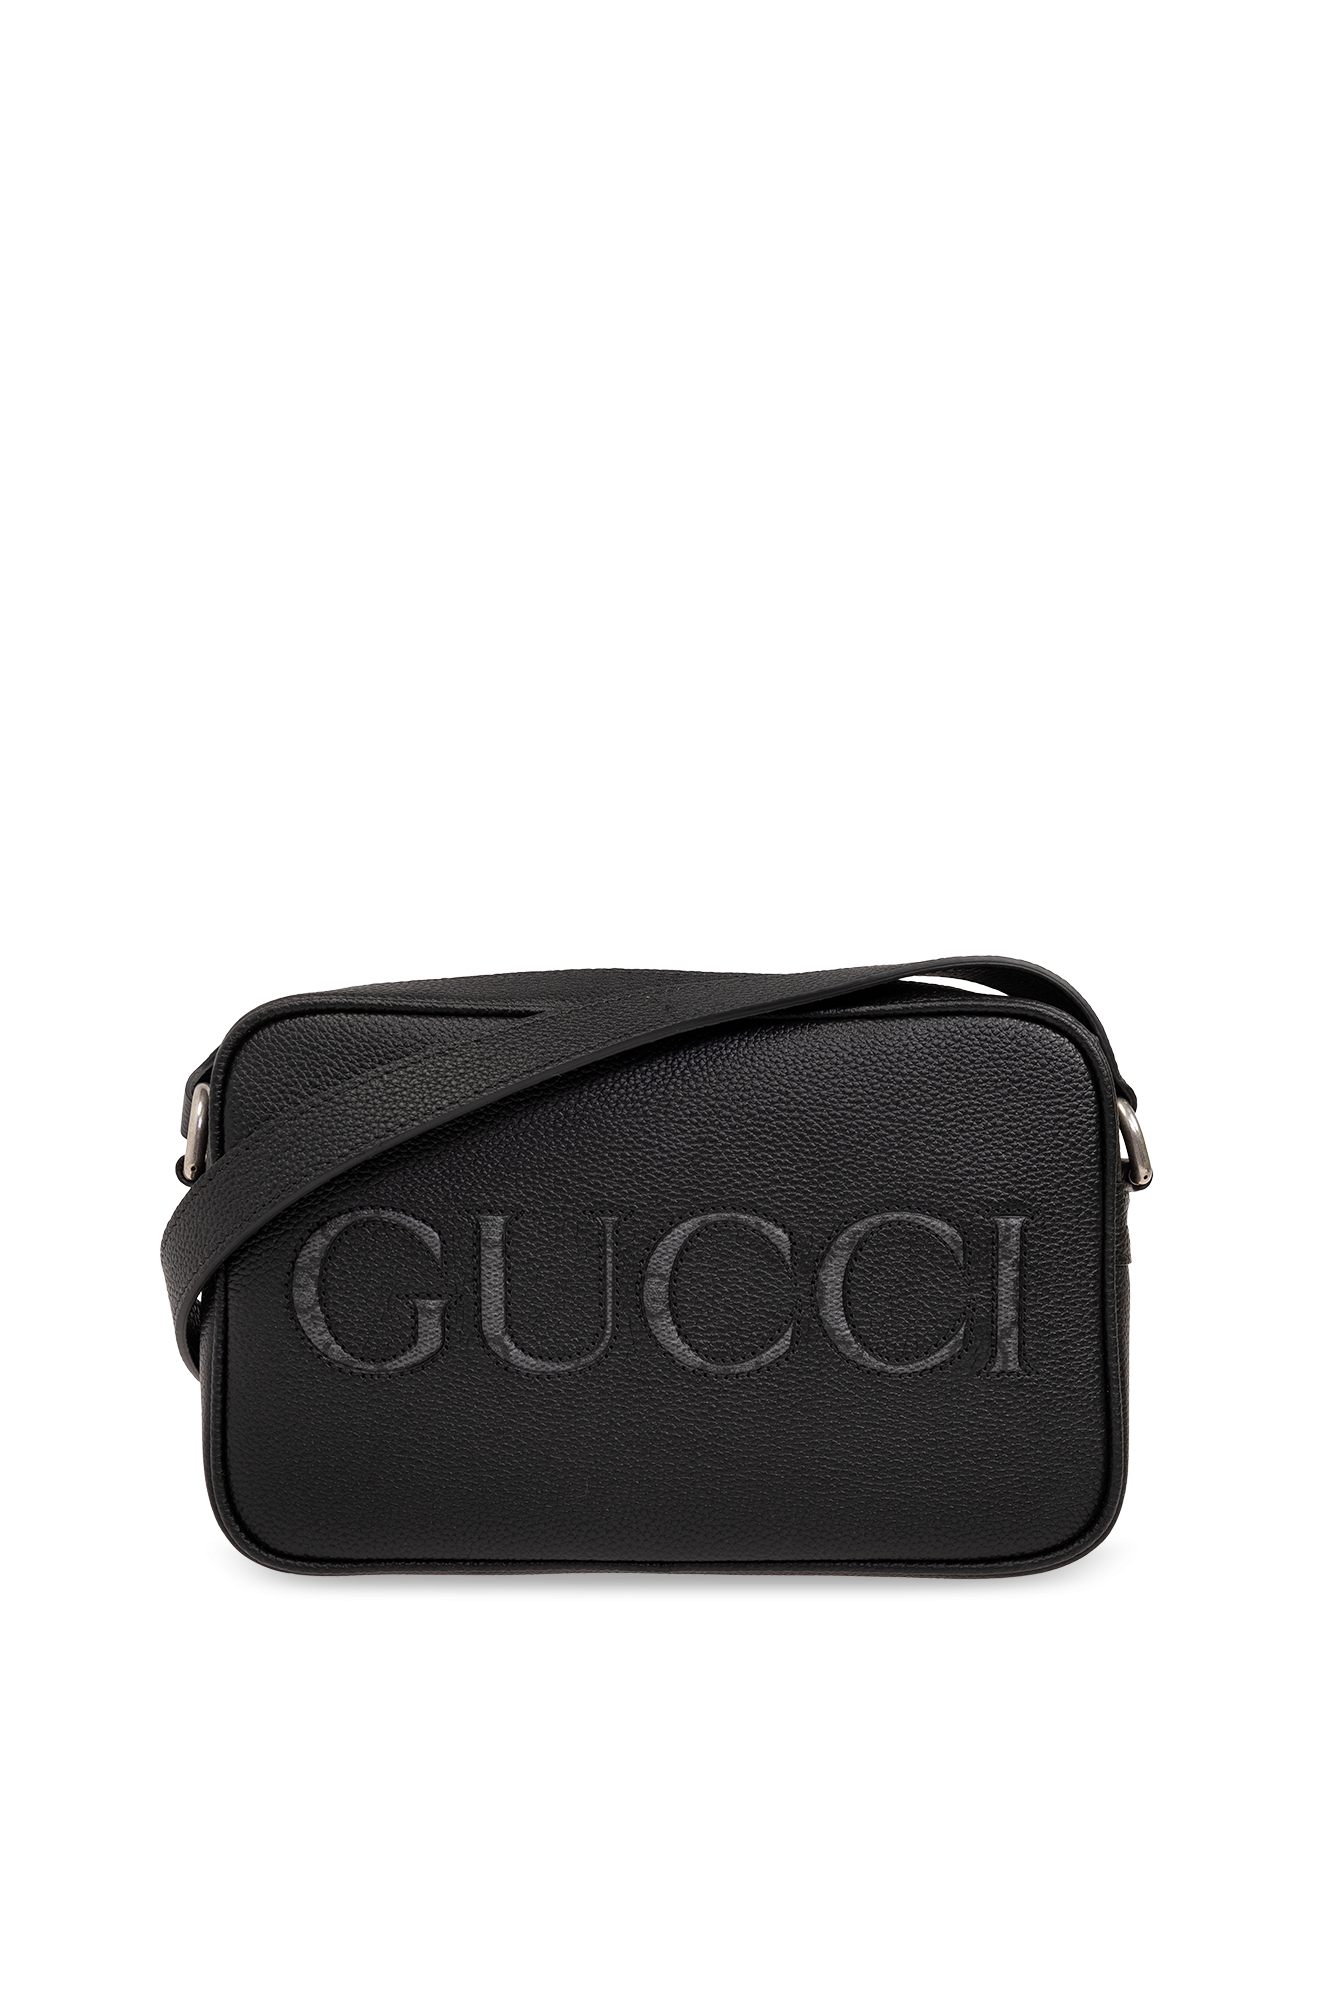 gucci PASEK Shoulder bag with logo